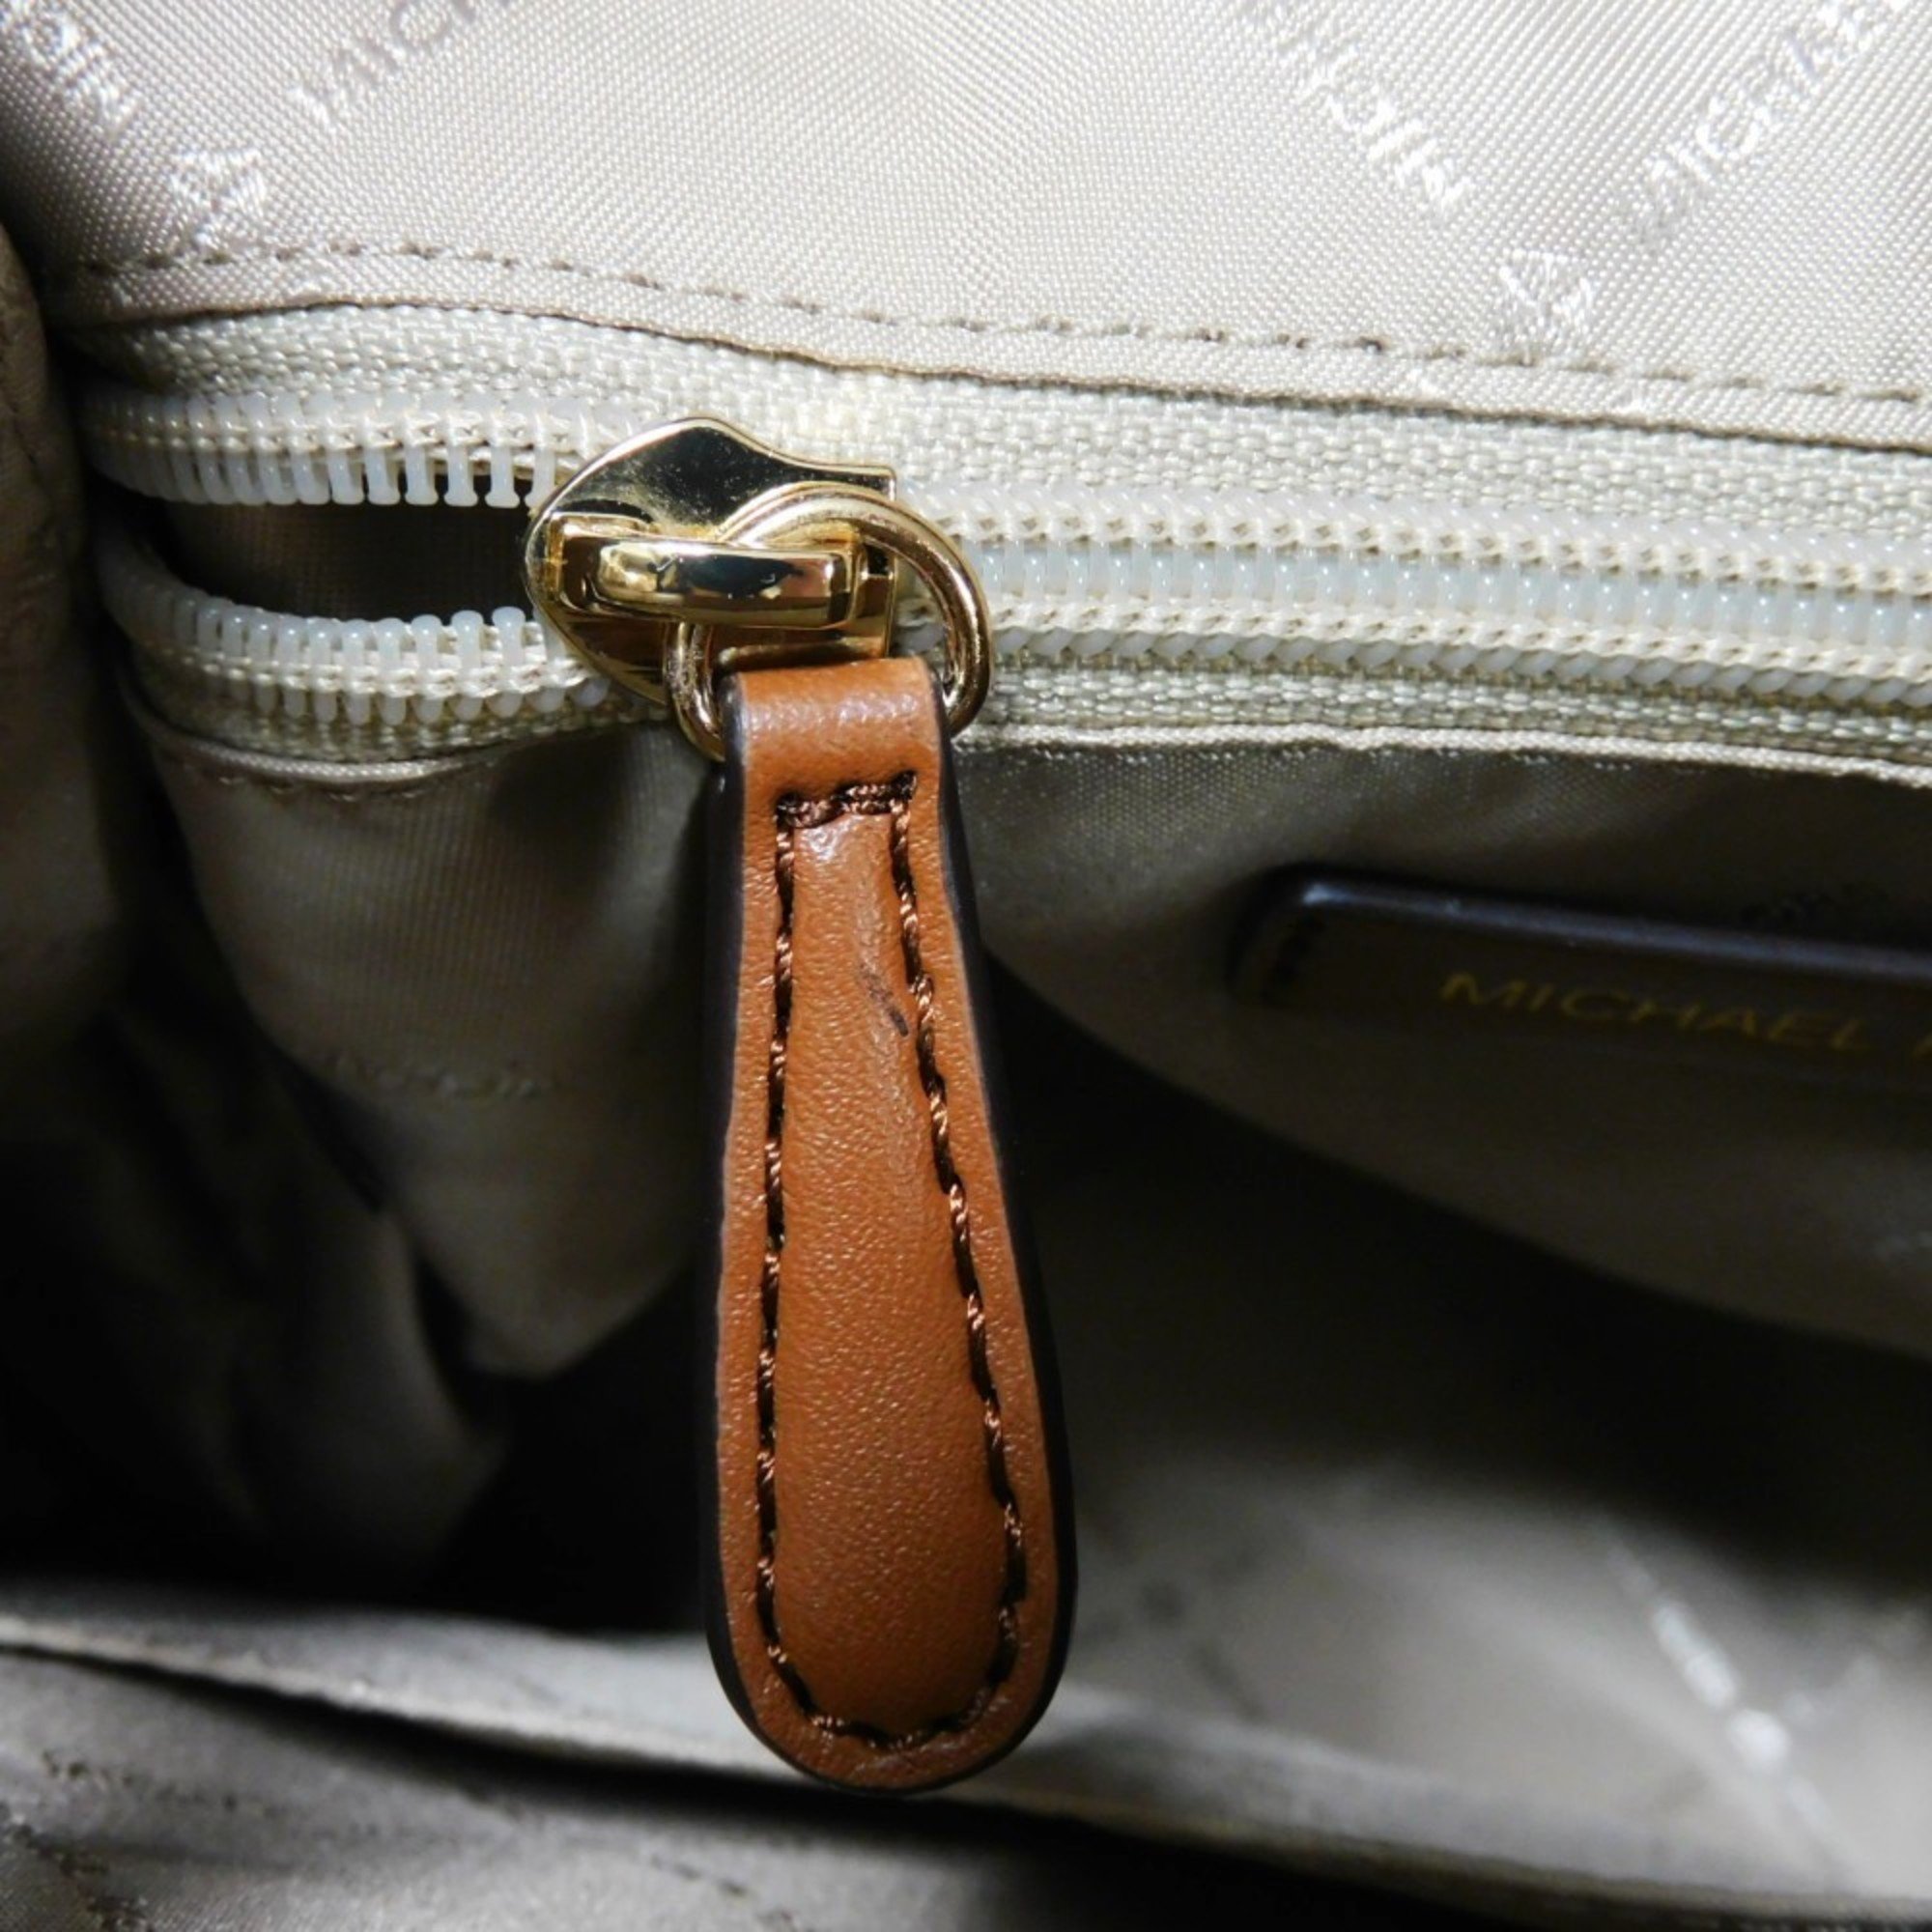 Michael Kors Rucksack Backpack JET SET ITEM Chain Medium Vanilla White Brown MK 35T1GTTB6B Women's Bag